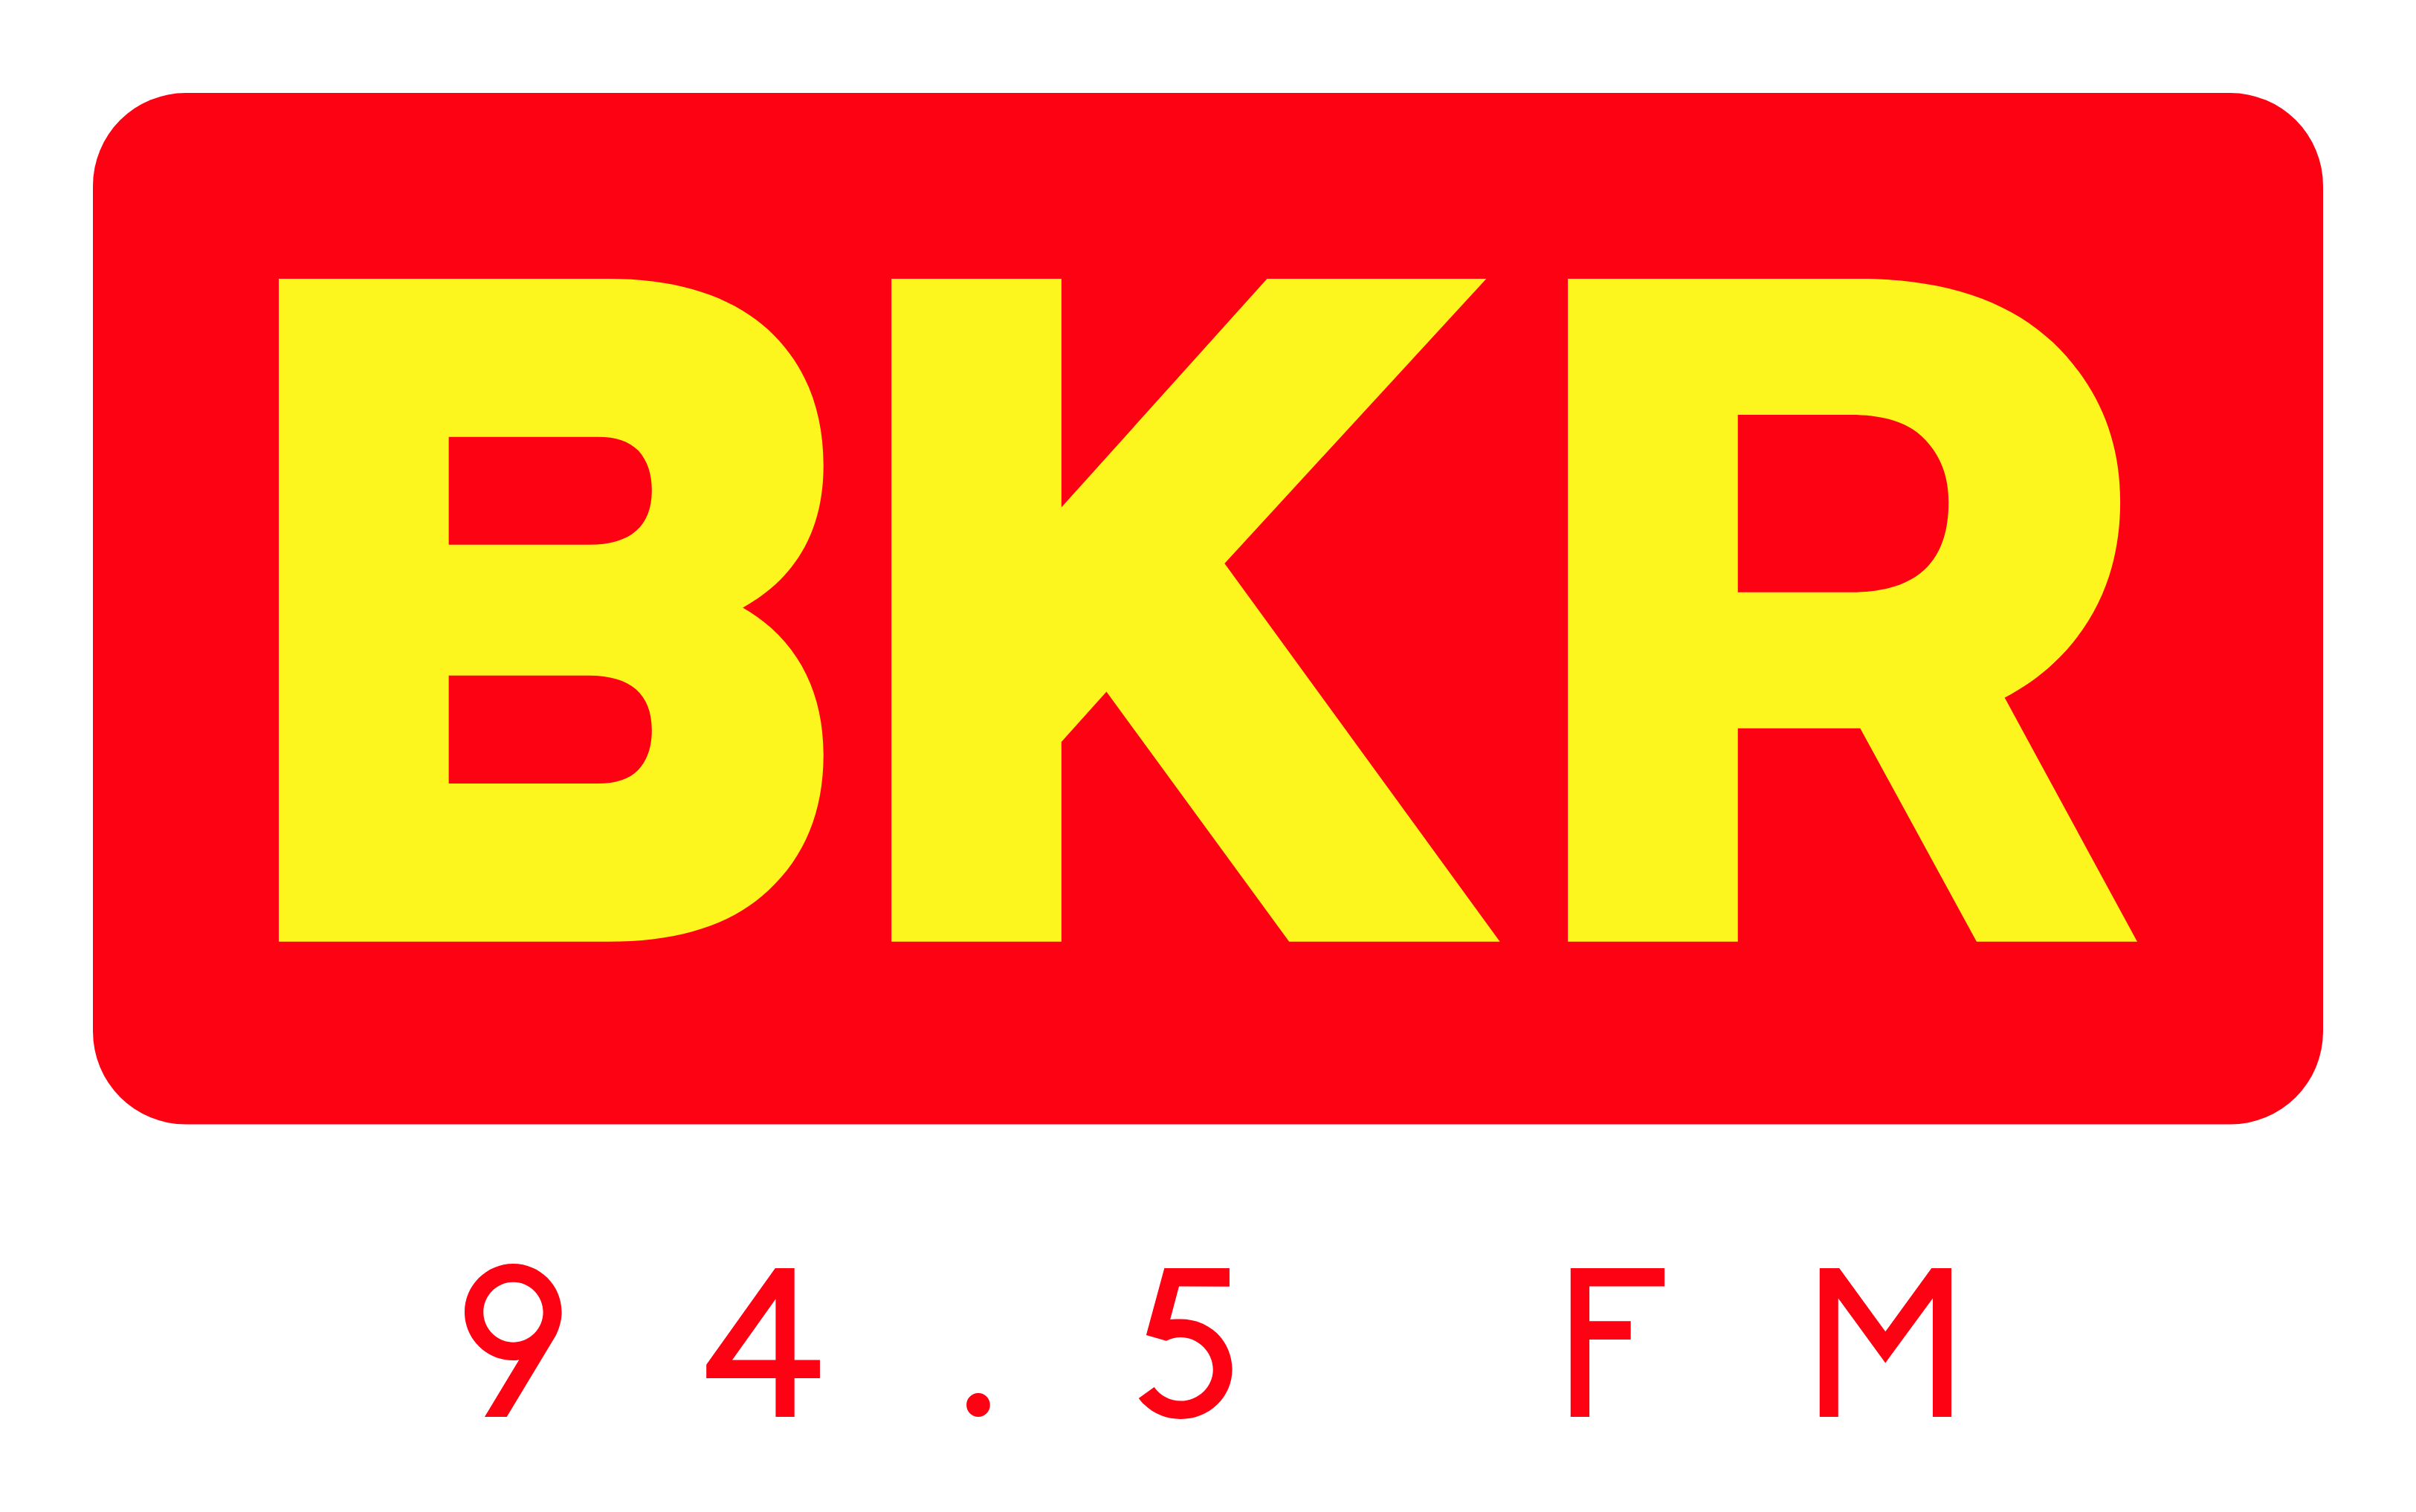 BKR 94.5